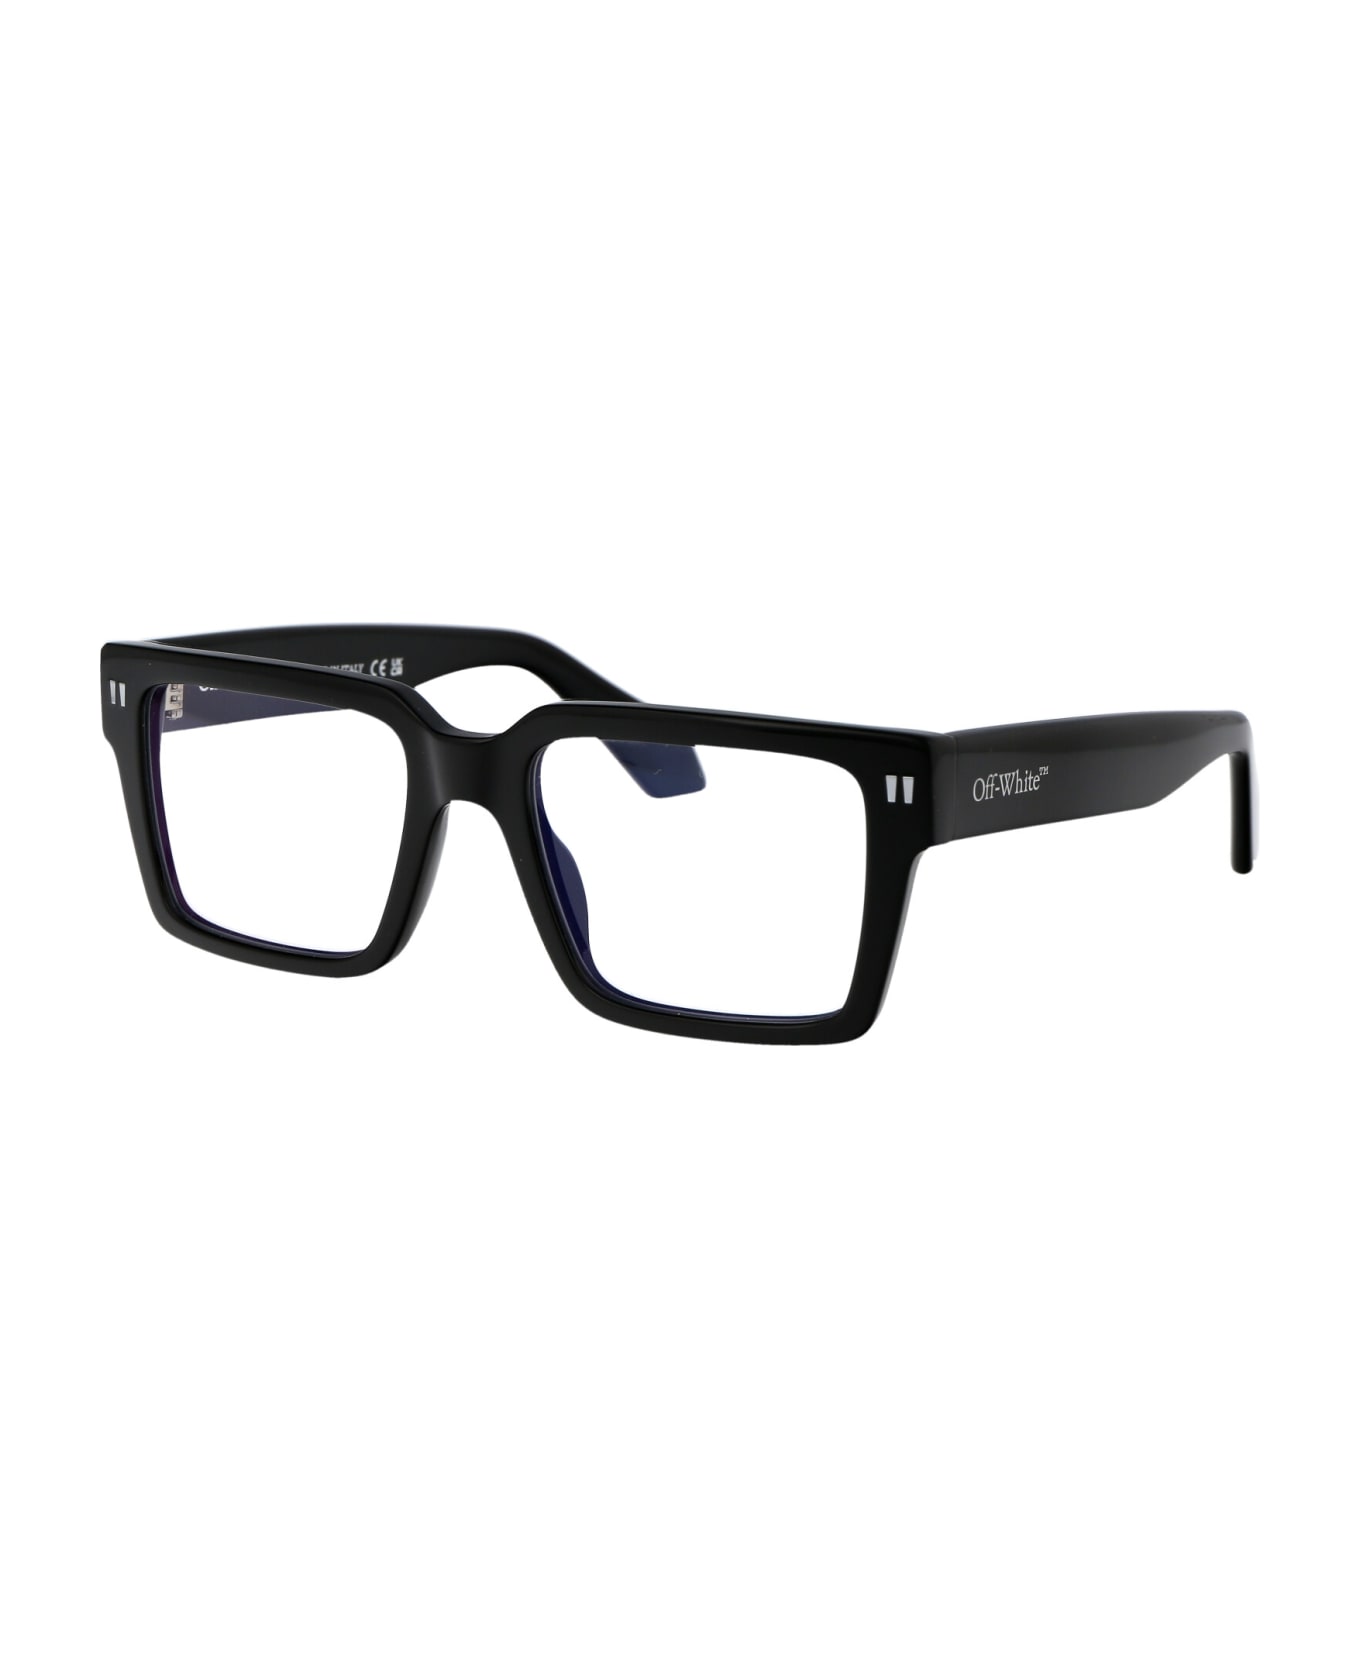 Off-White Optical Style 54 Glasses - 1000 BLACK